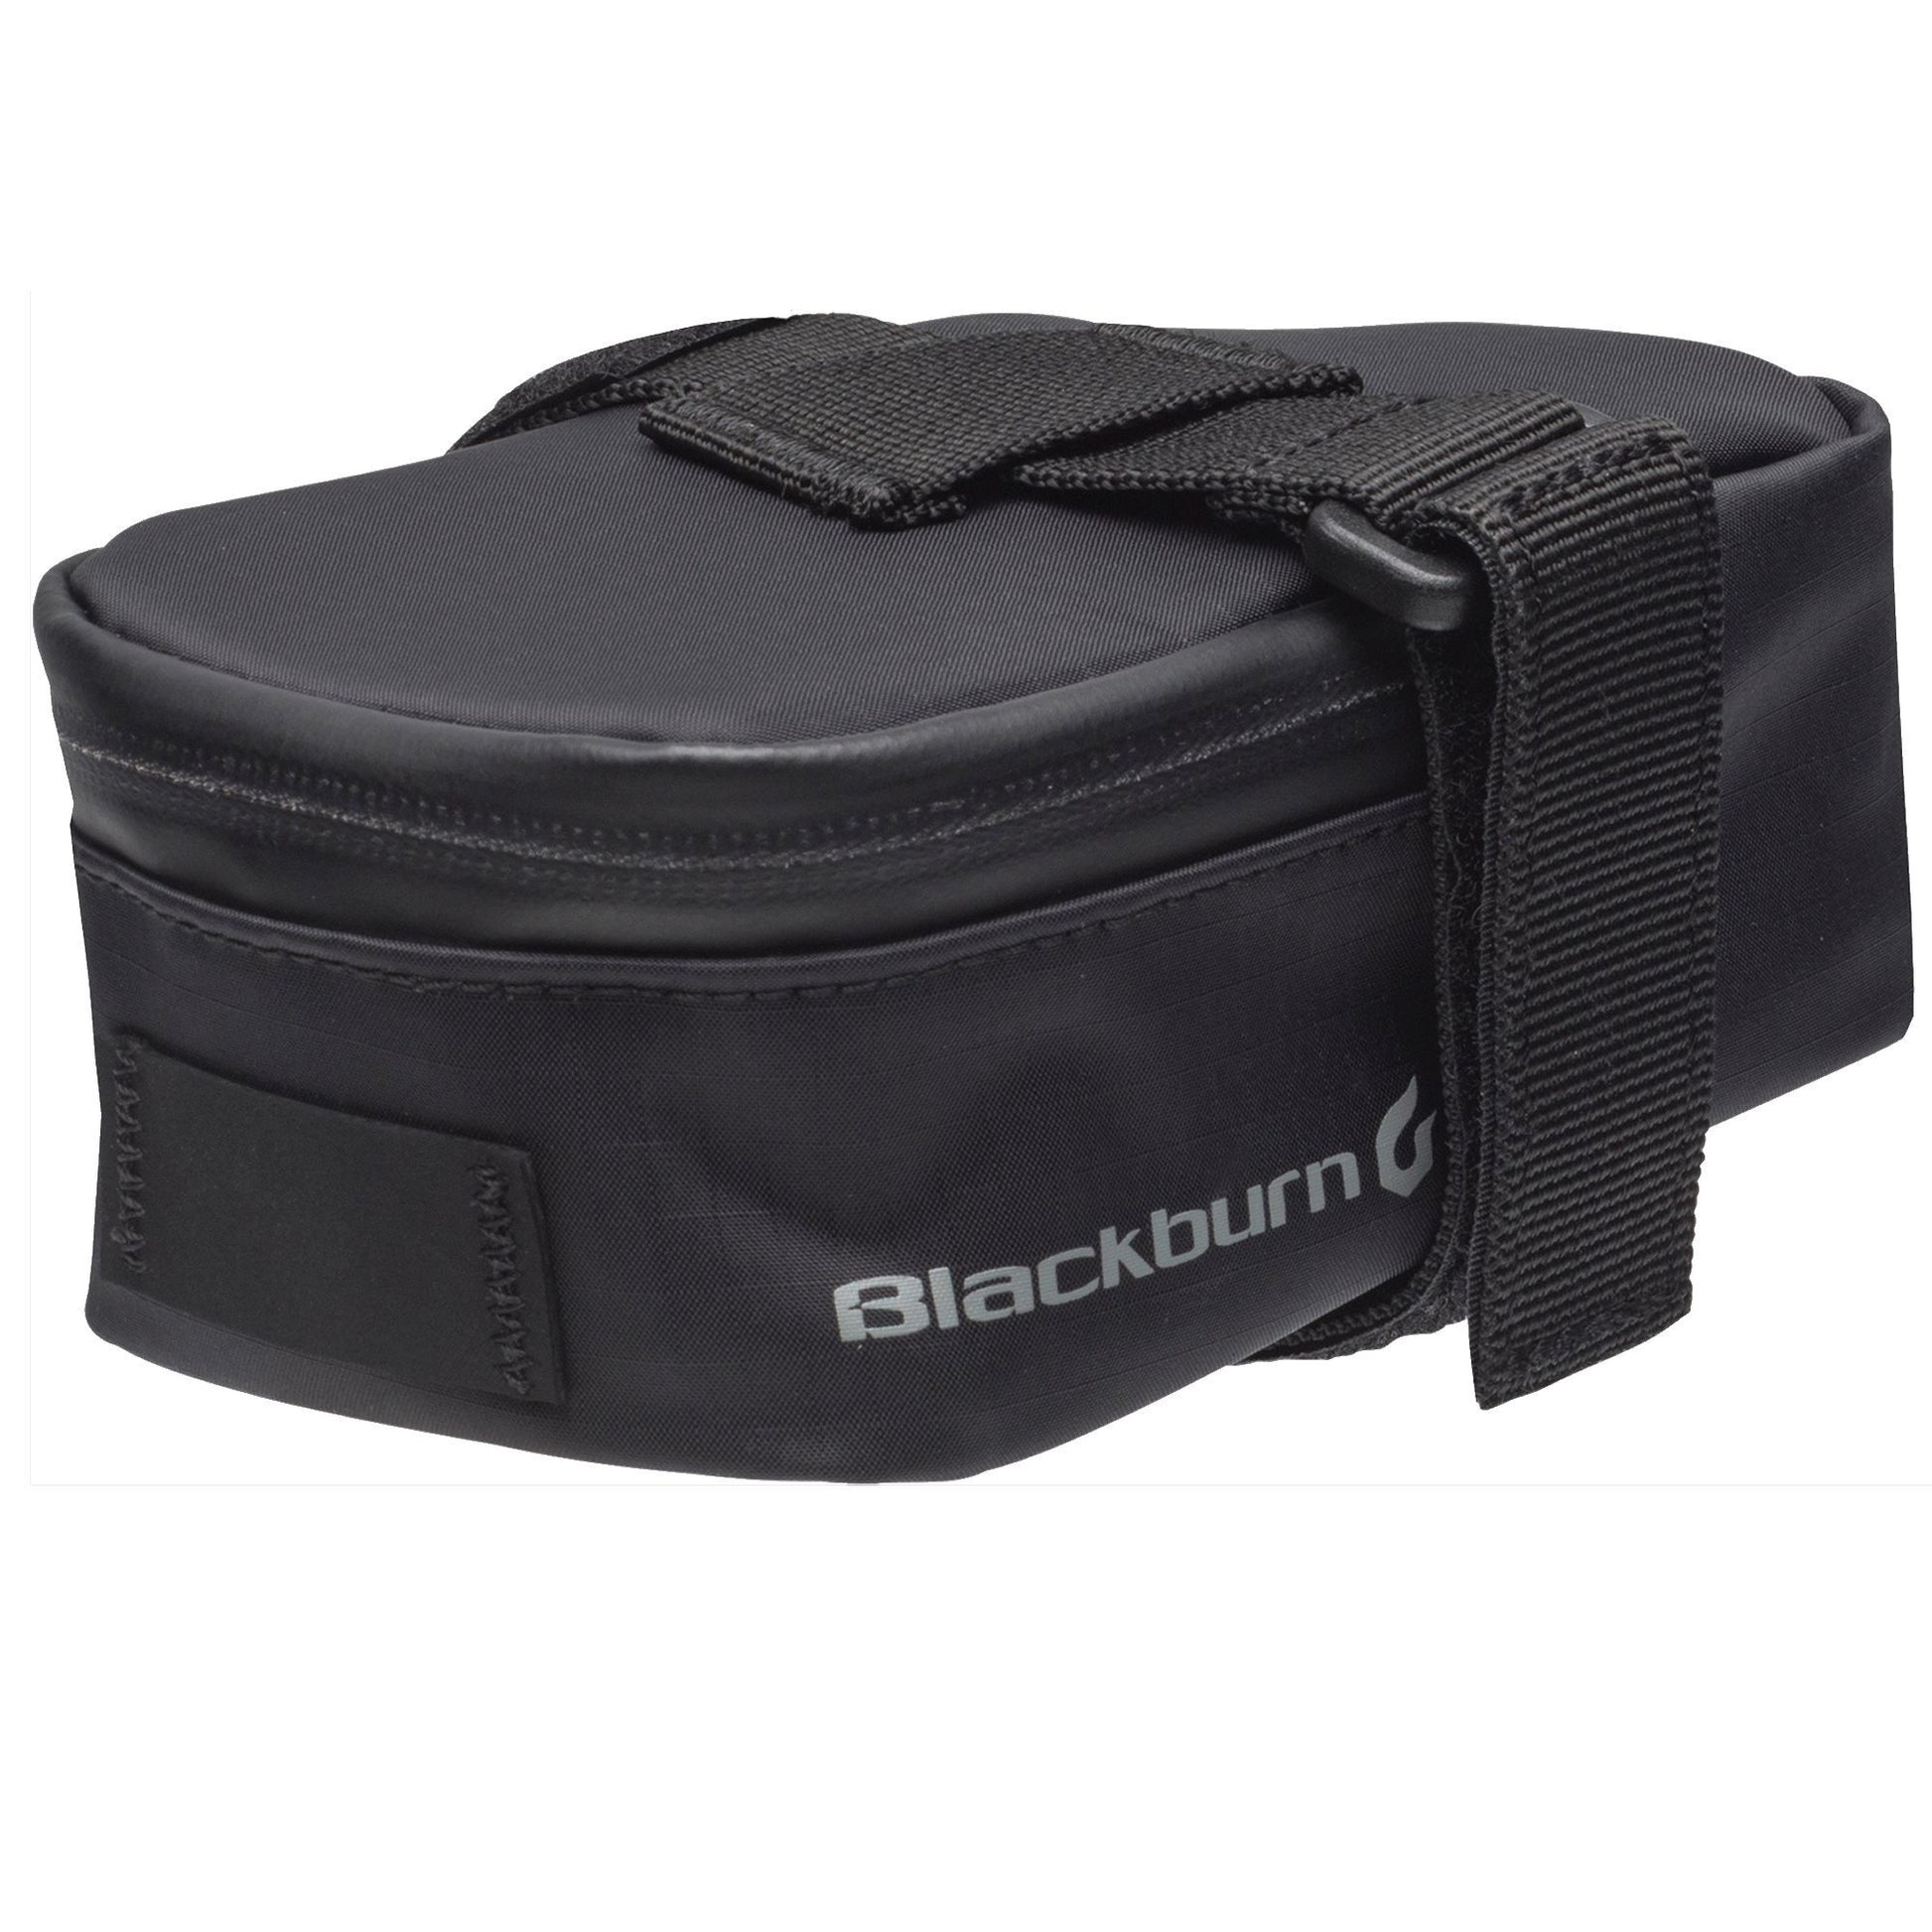 Blackburn Grid MTB Seat Bag Black Reflective OS - Blackburn Panniers & Racks